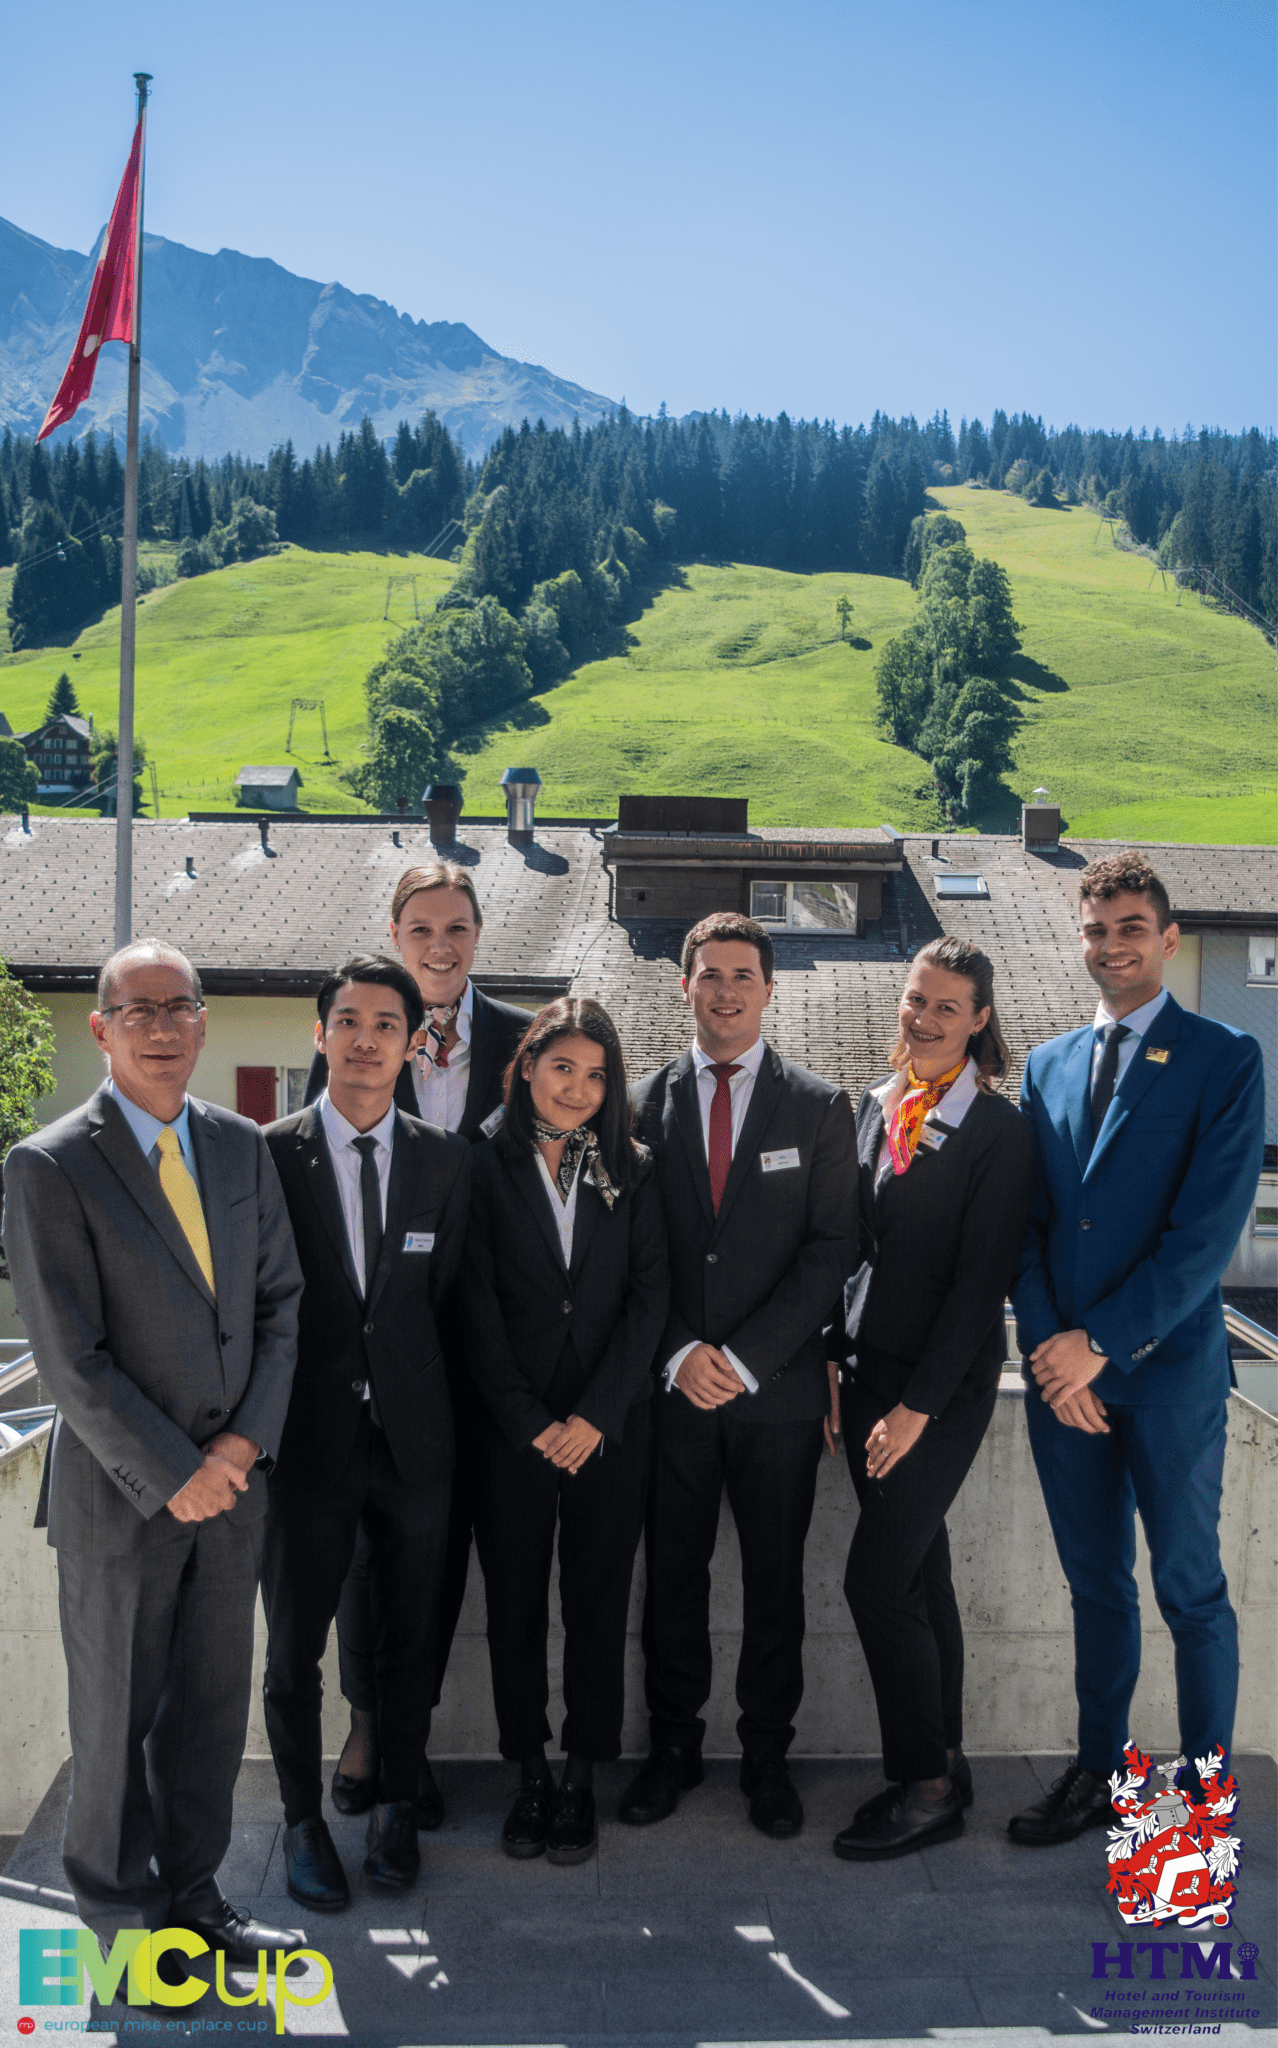 HTMi Switzerland Announces EMCup 2020 Team